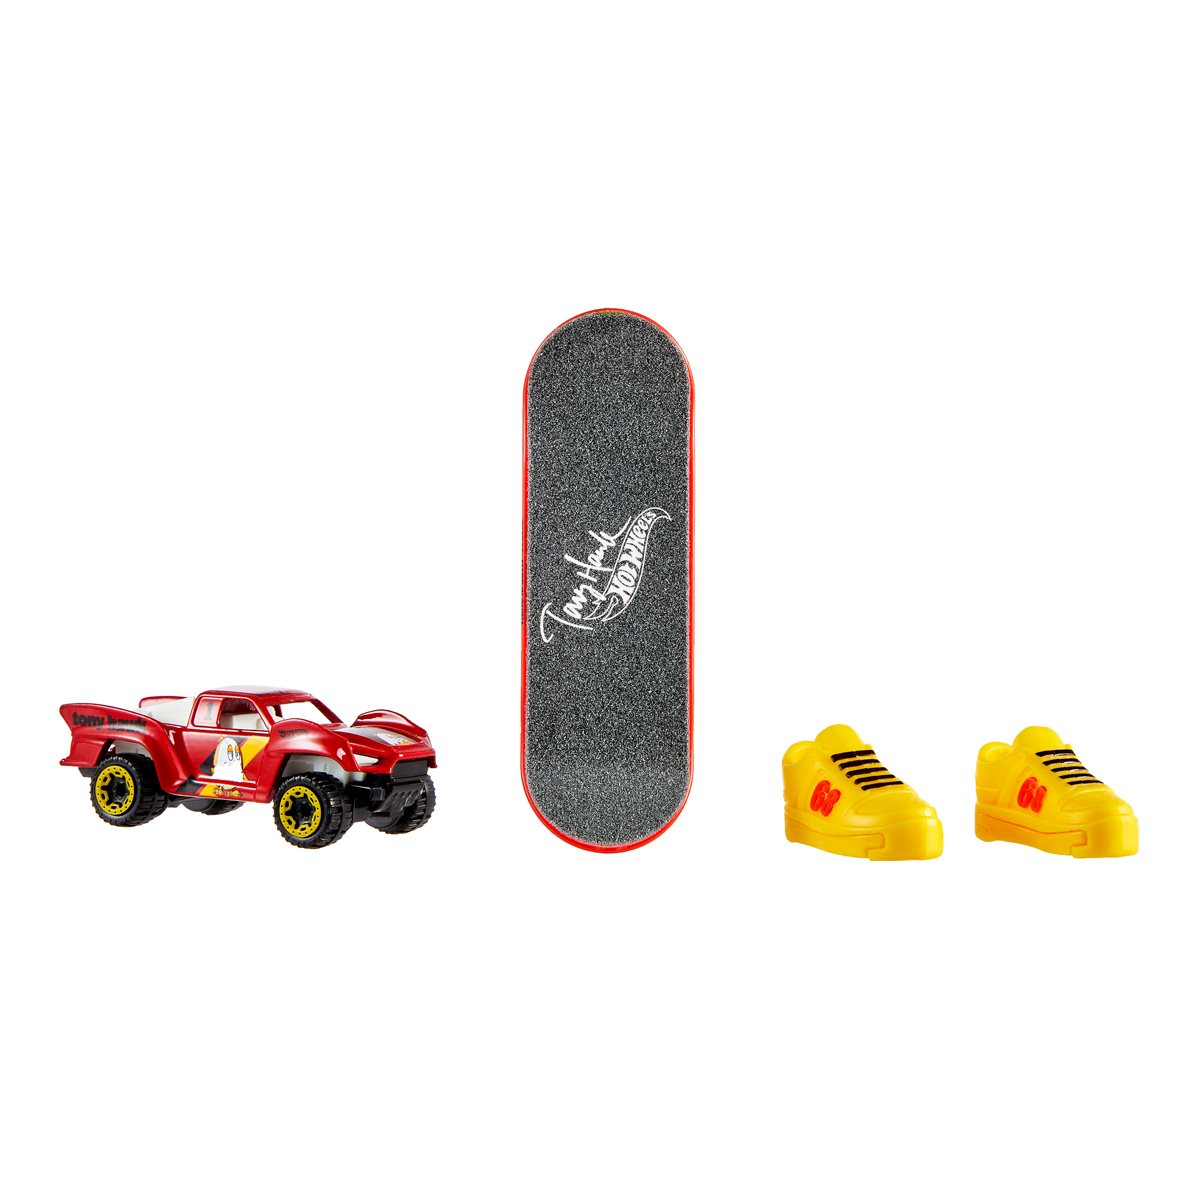 Hot Wheels Skate - Hot Wheels Skate Fingerboard And Shoe 4 Pack